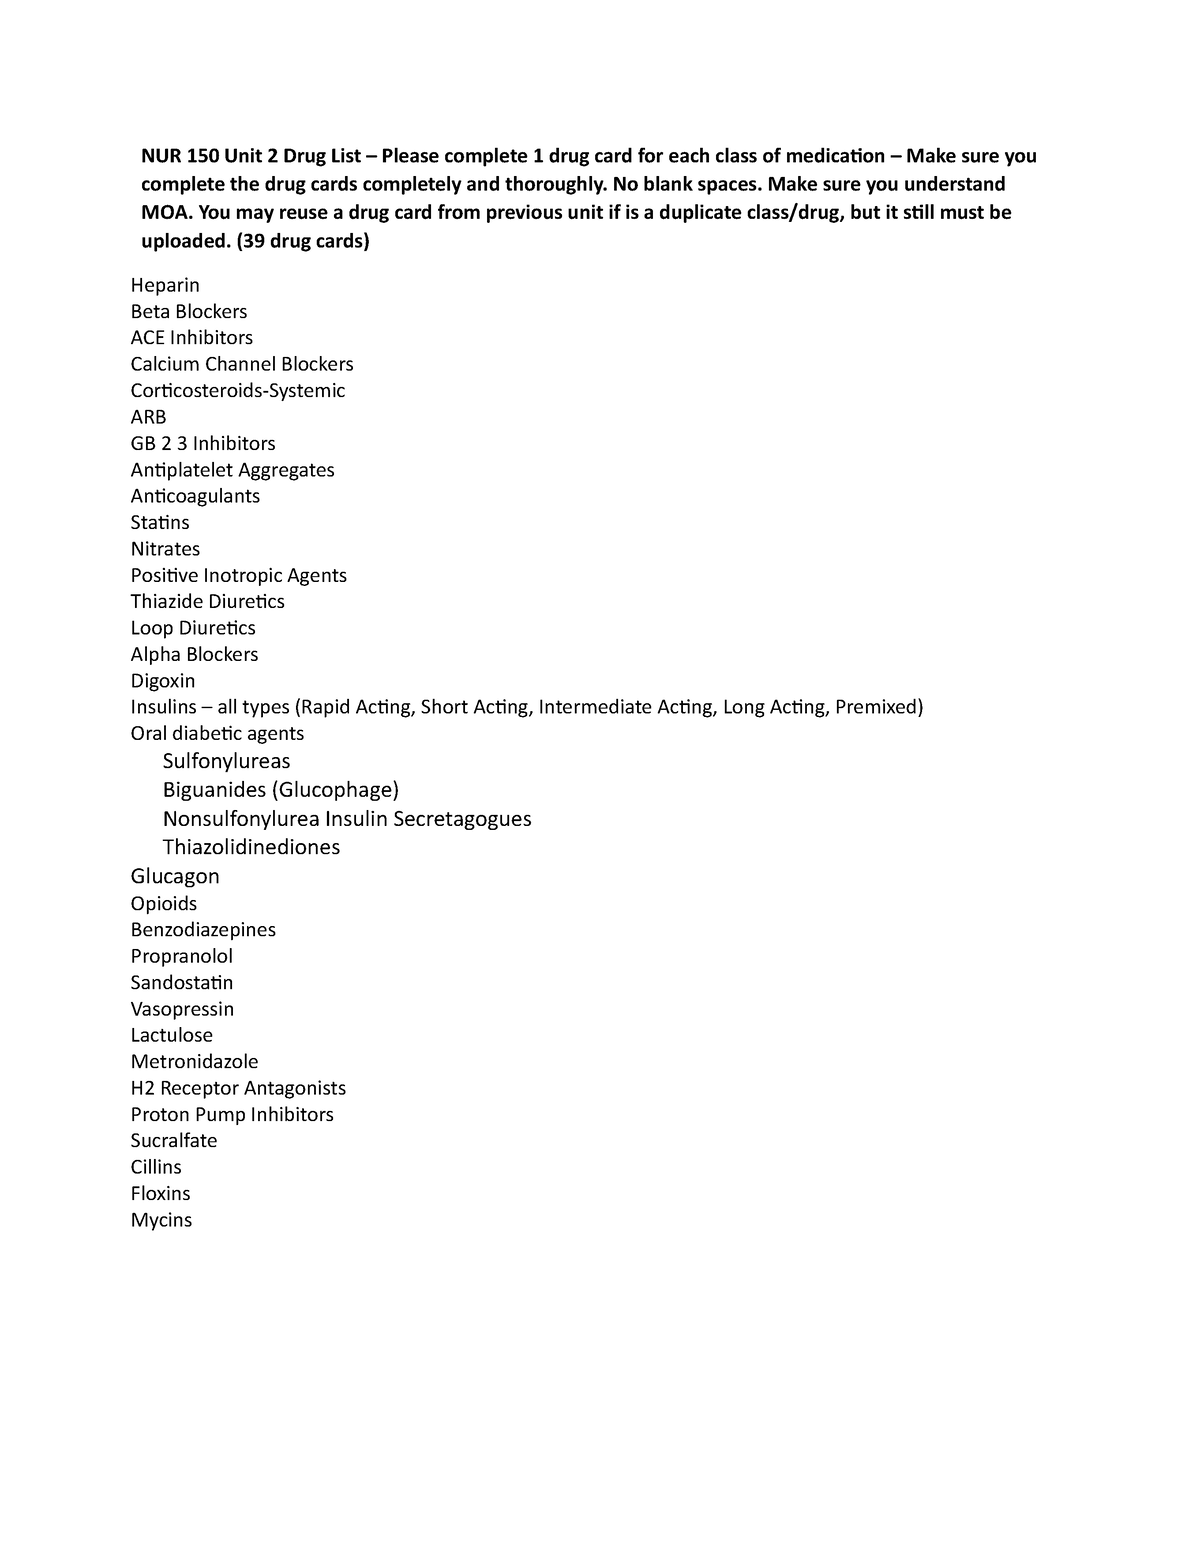 NUR 150 Unit 2 Drug List - Medication list for unit two focusing on PAD ...